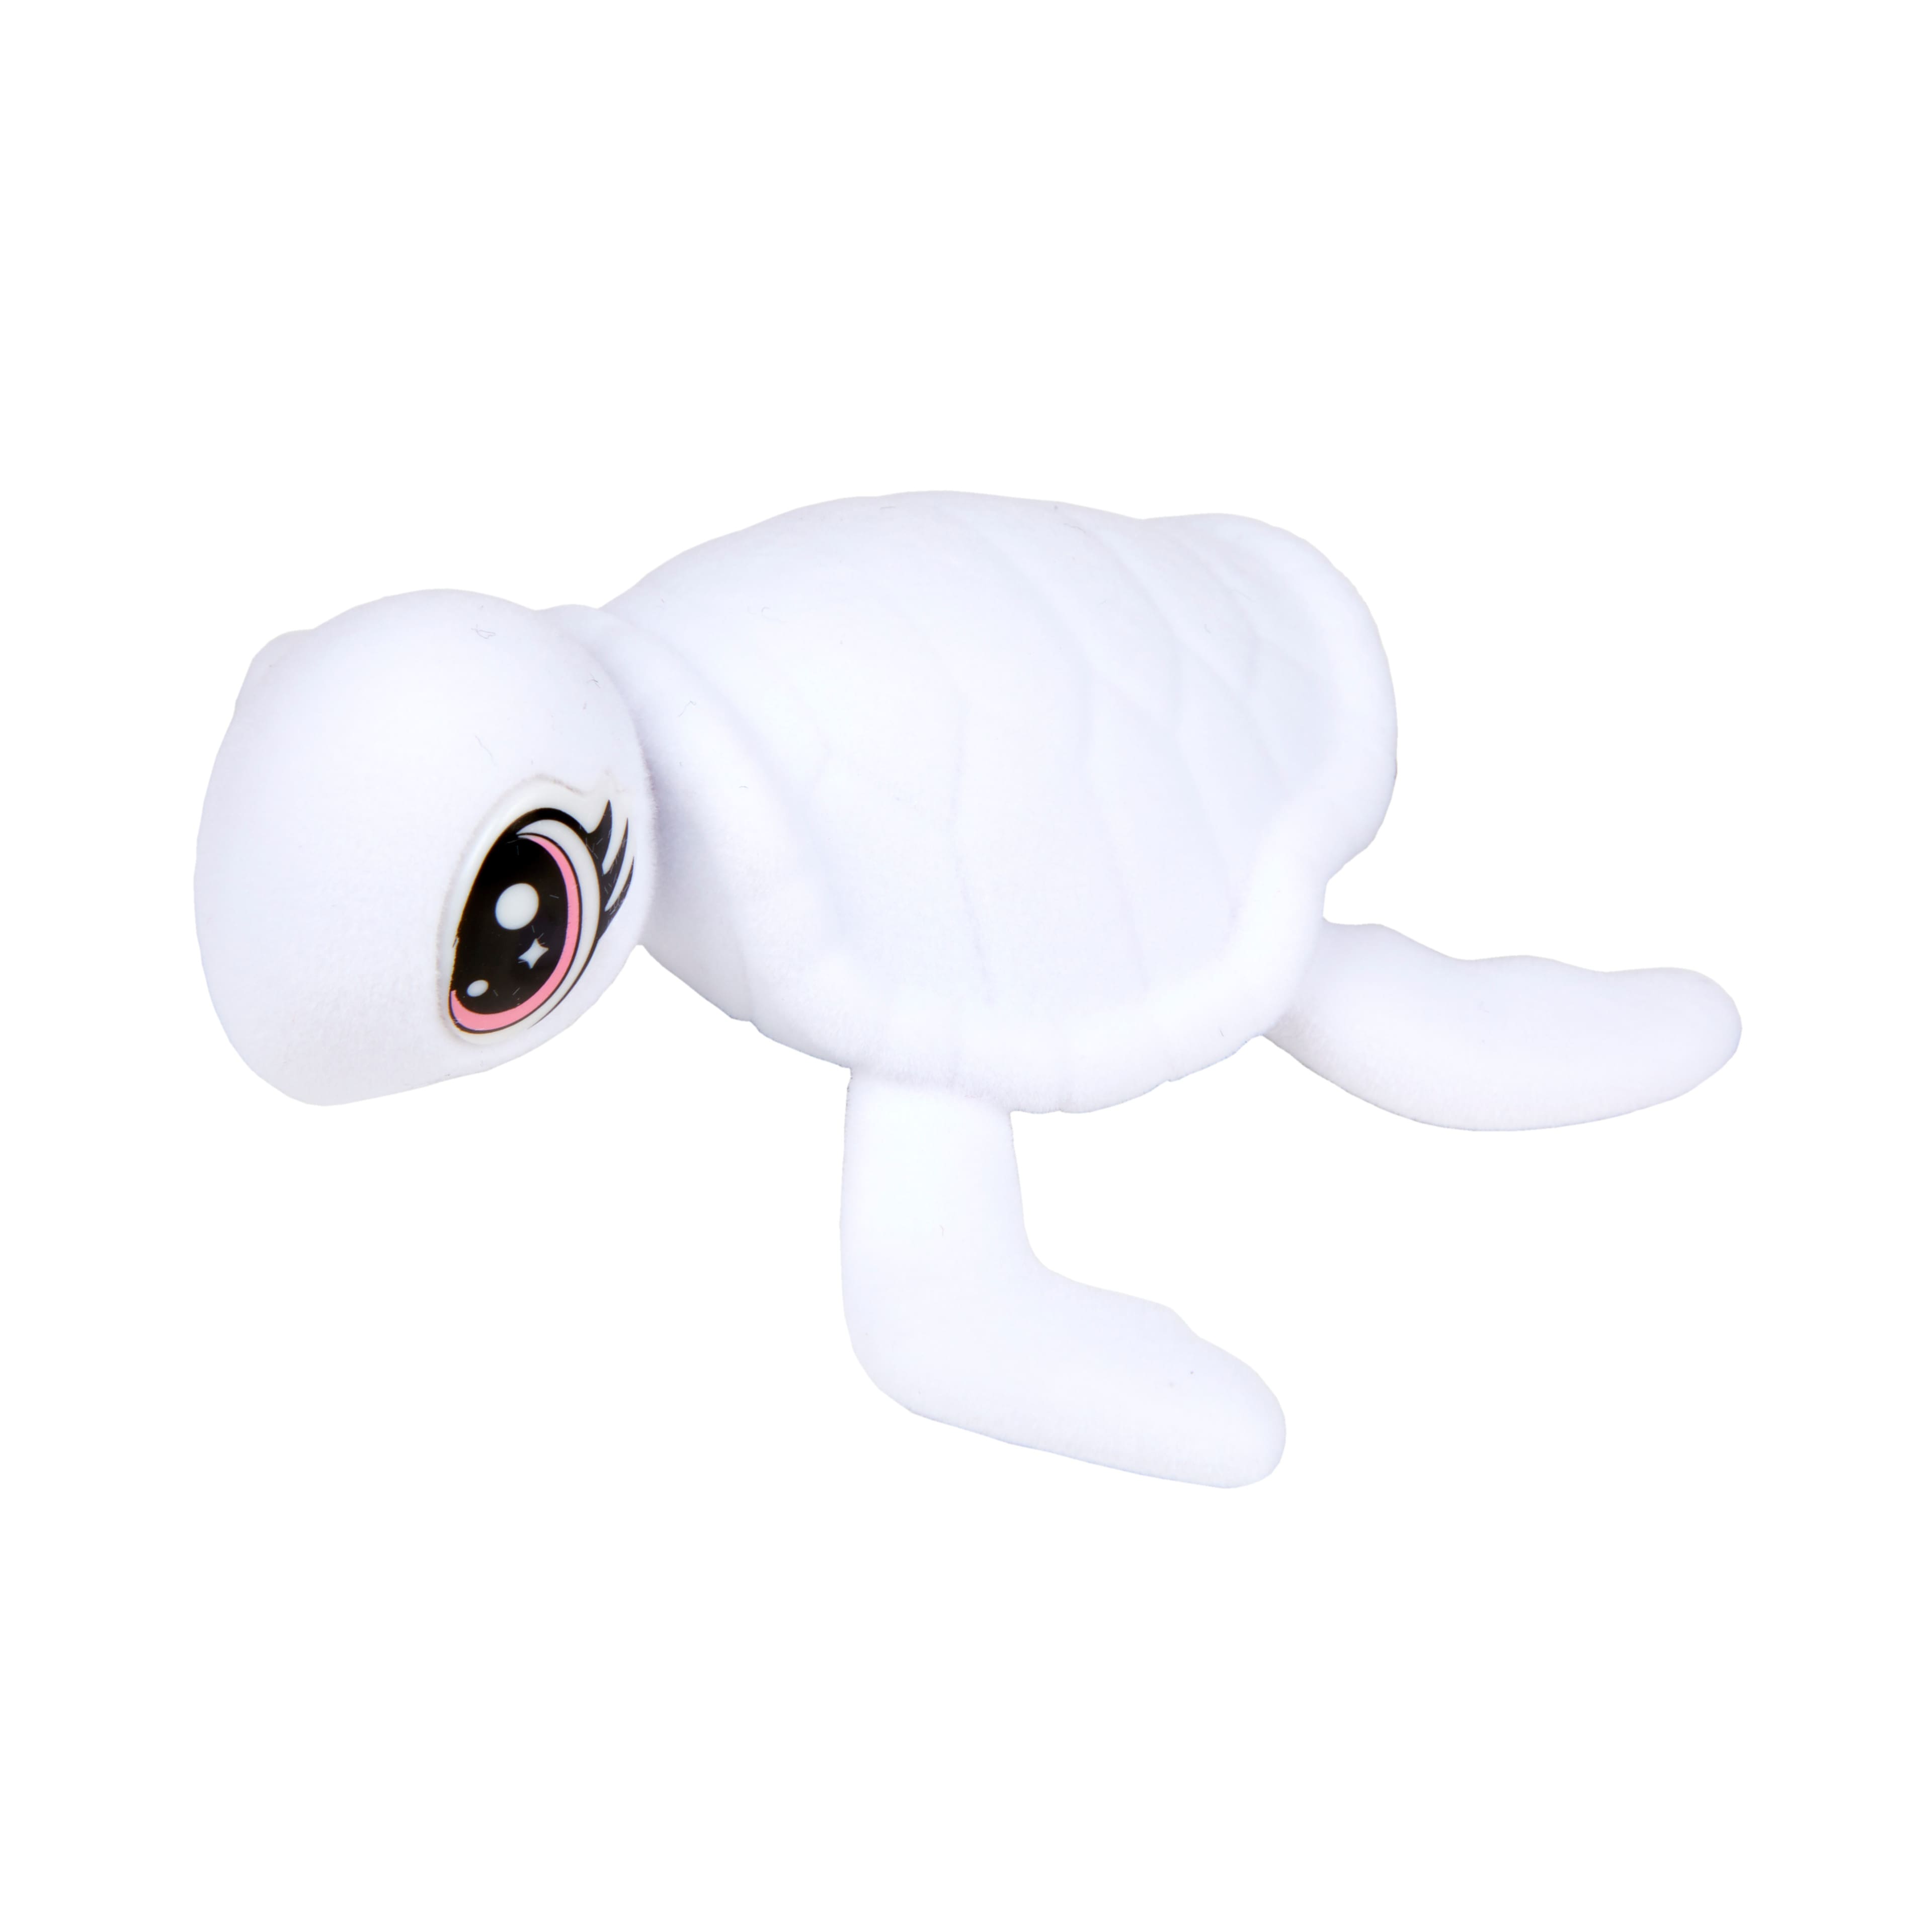 12 Pack: Assorted Scribble Scrubbie&#xAE; Ocean Pets Washable Pet Figurine